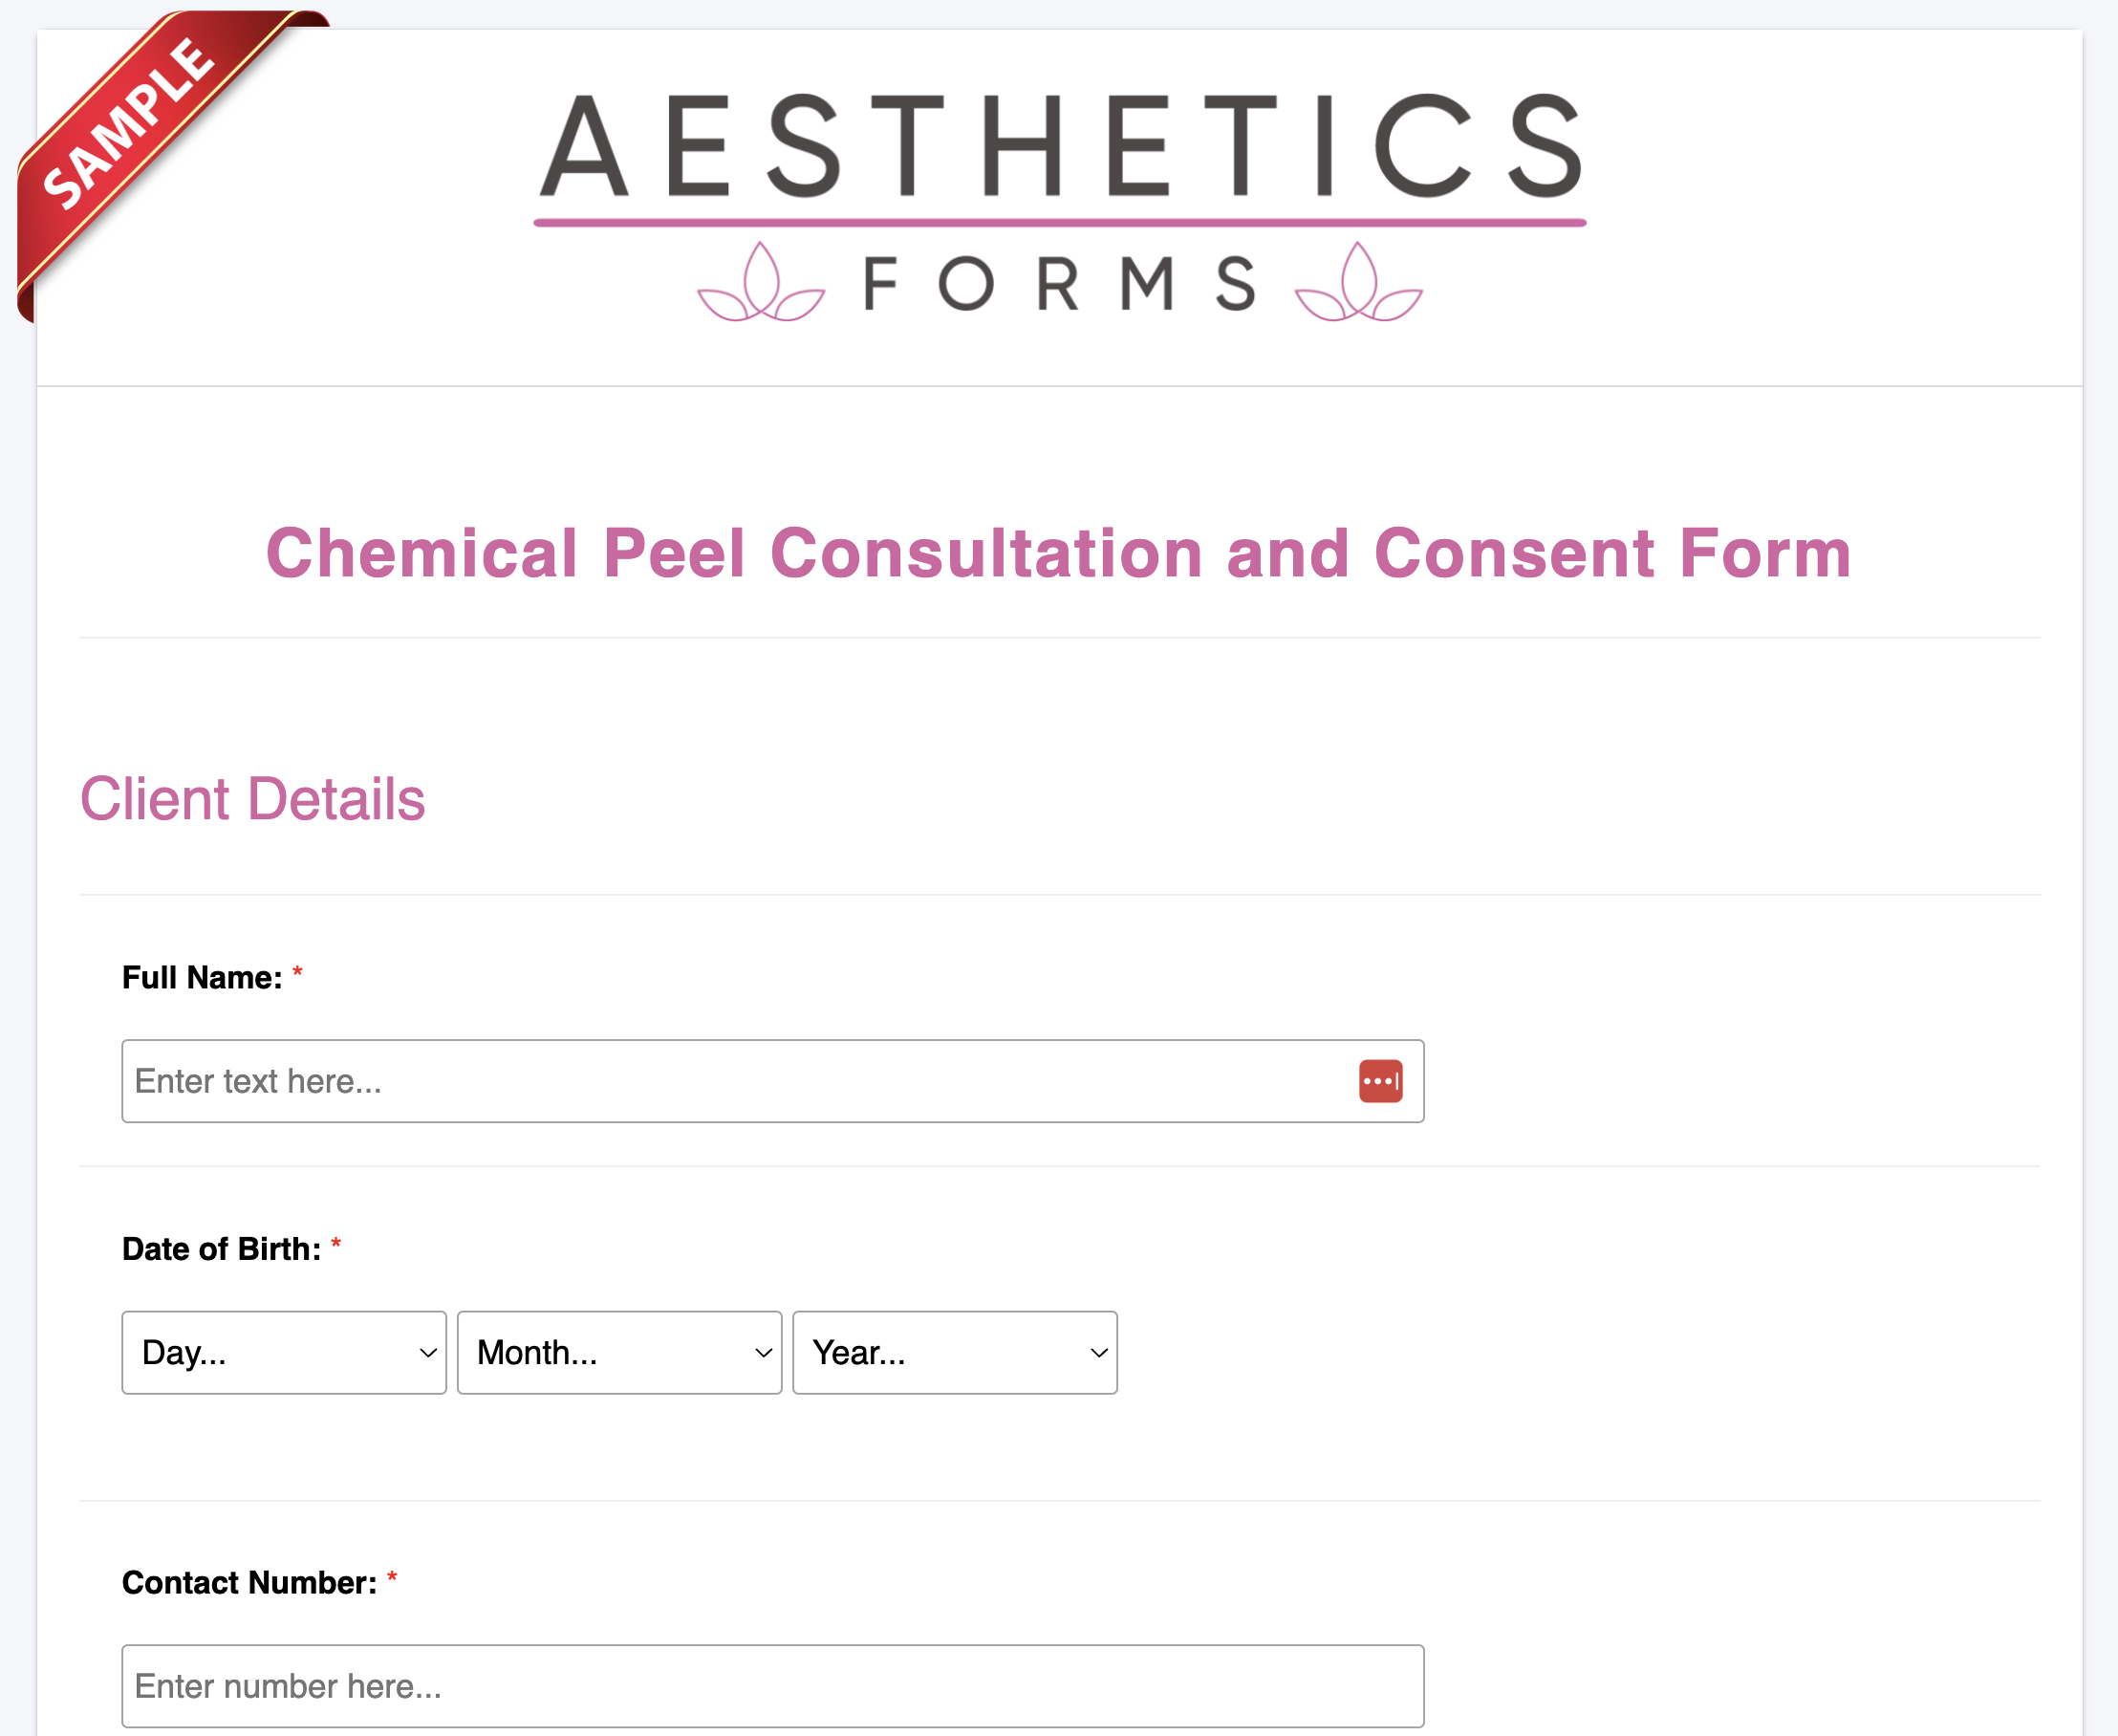 Chemical Peel Consultation